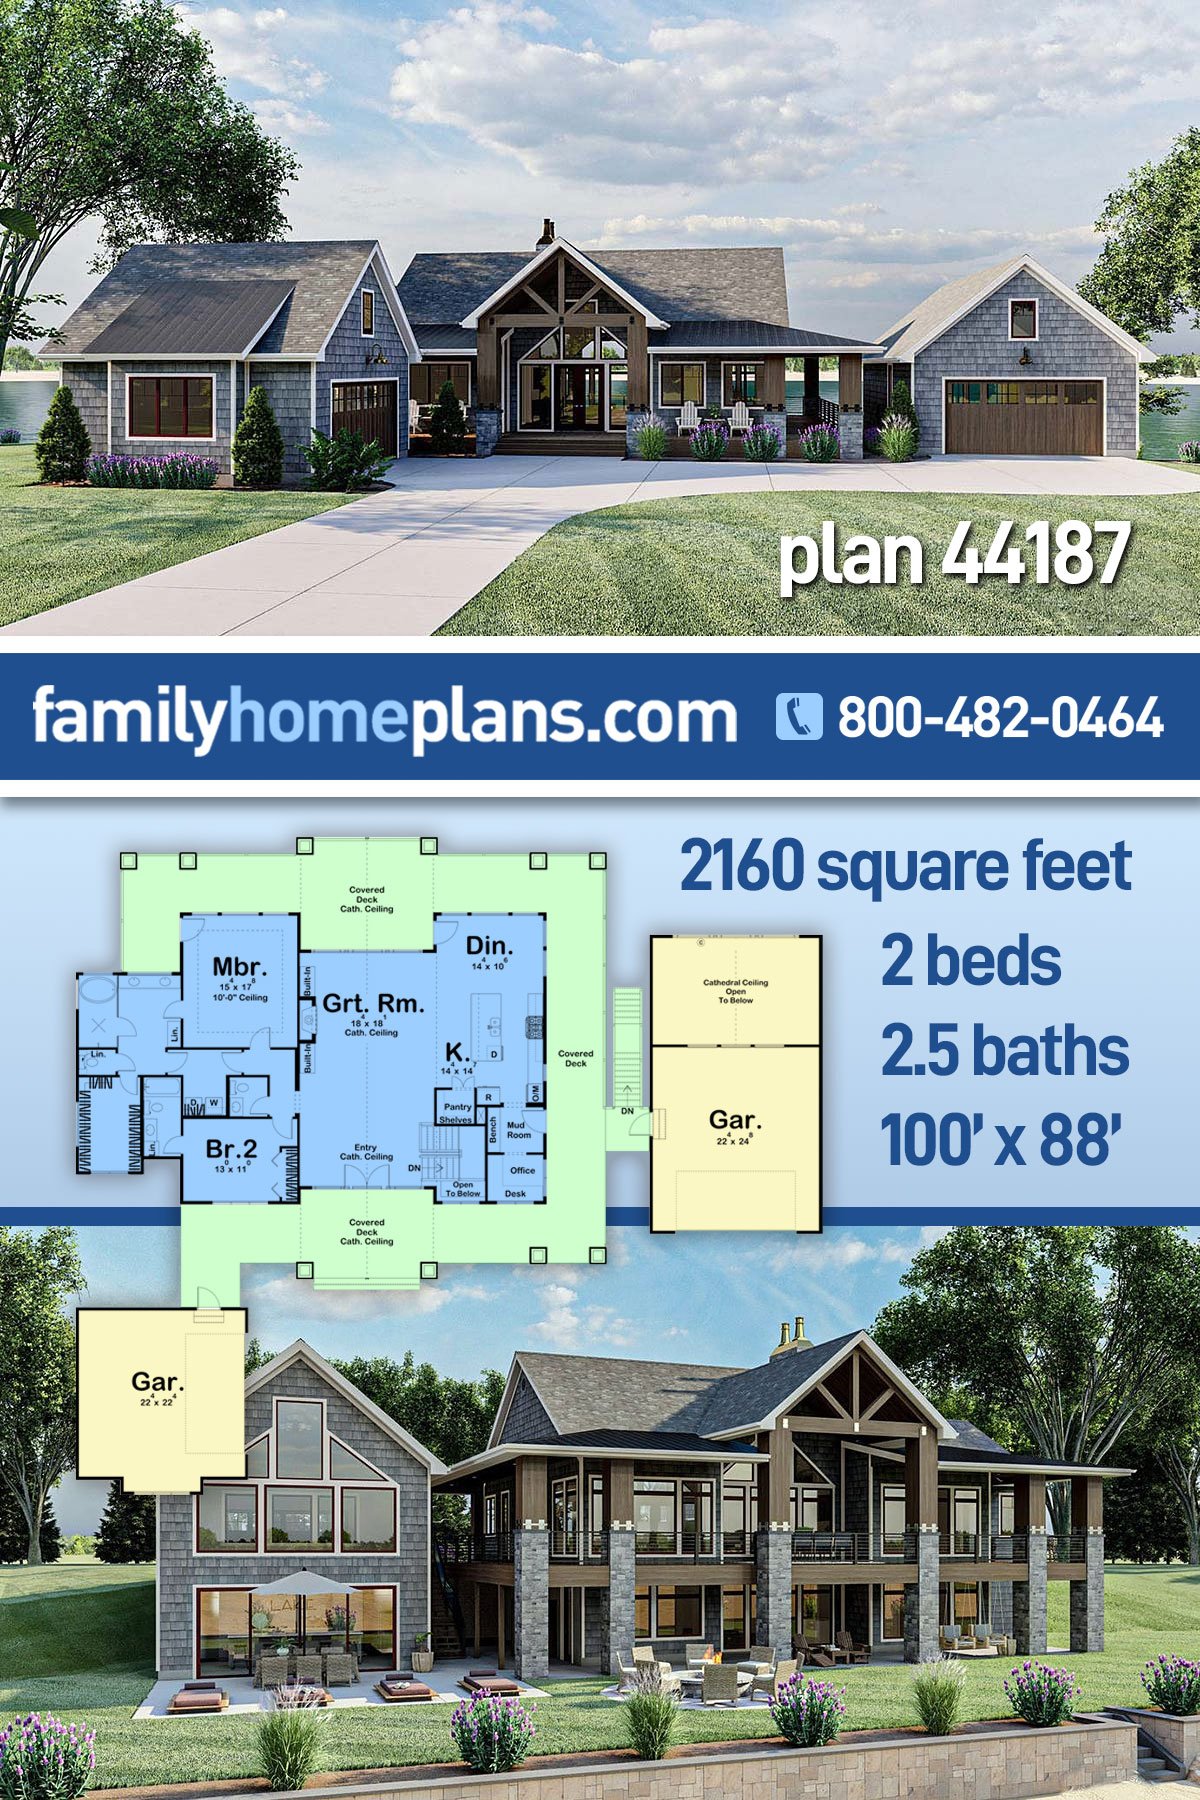 House Plan 44187